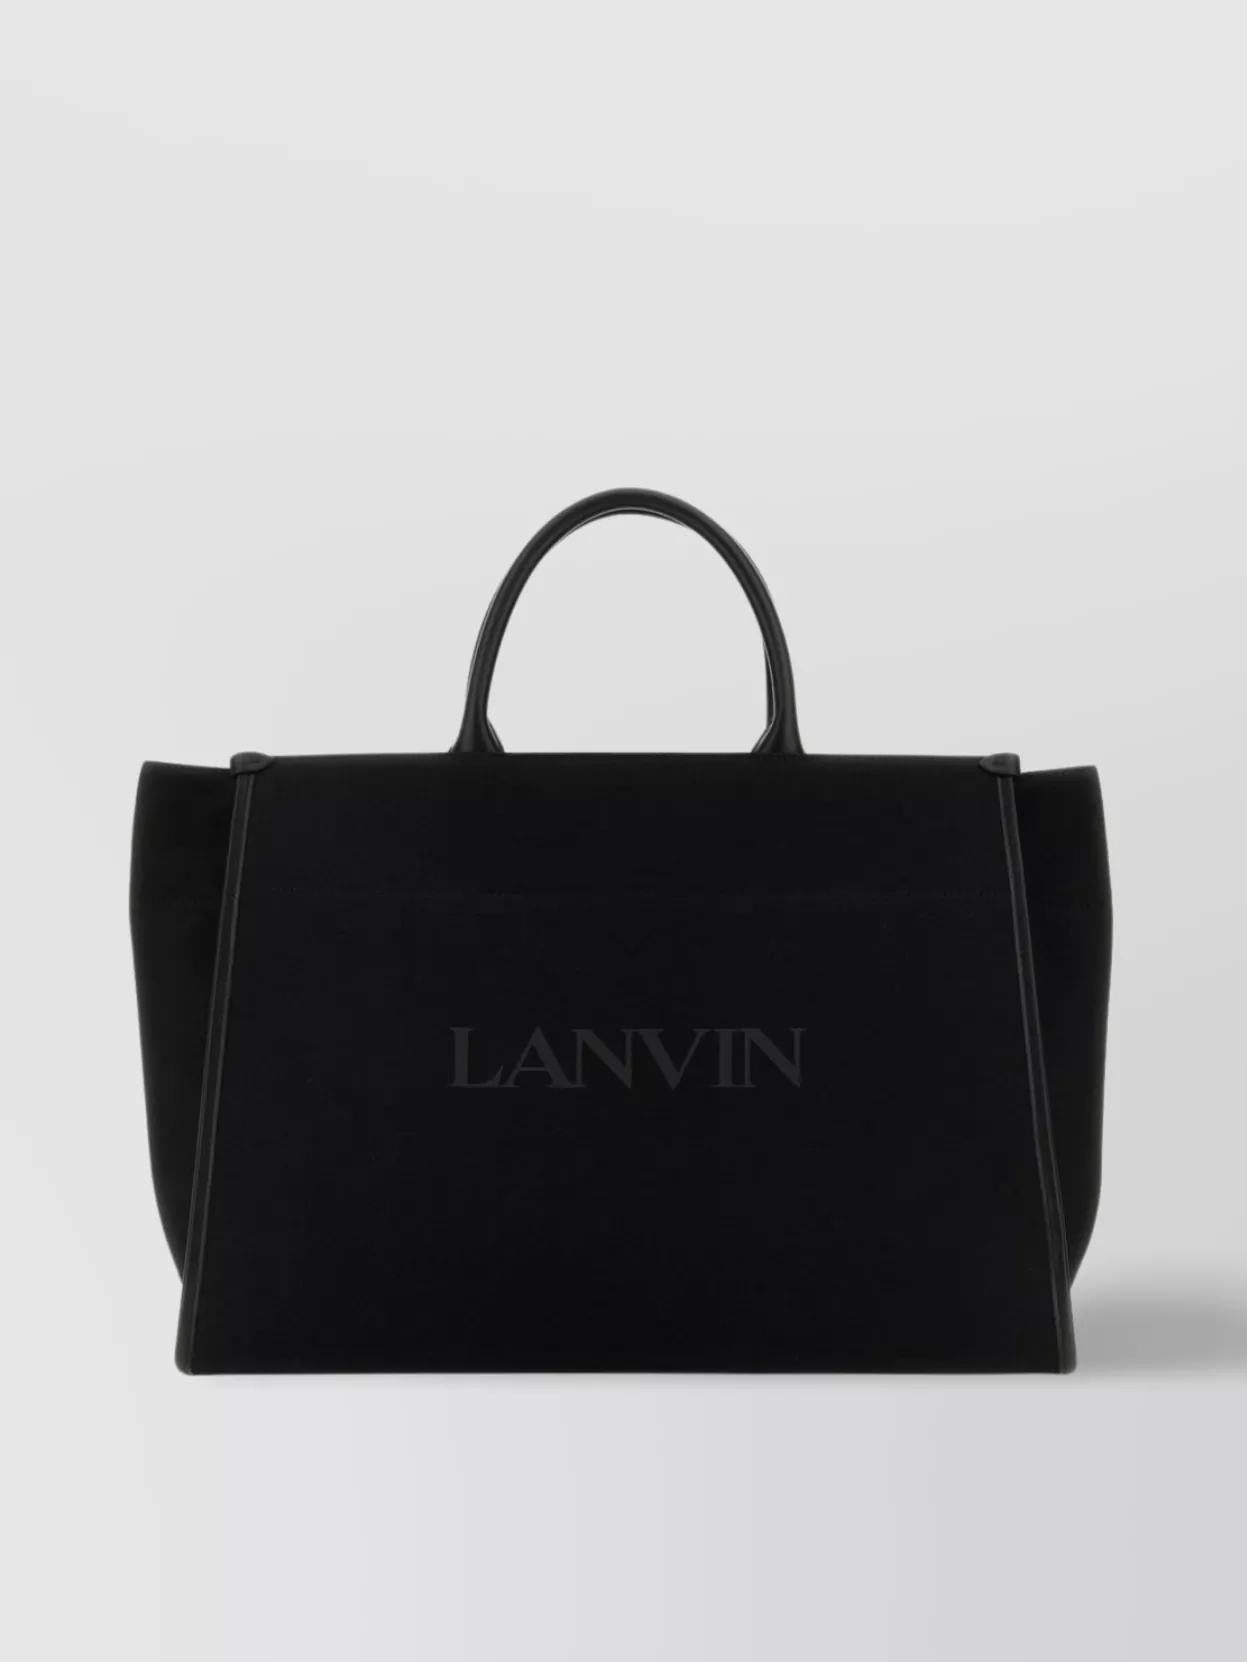 LANVIN CANVAS MM SHOPPING BAG